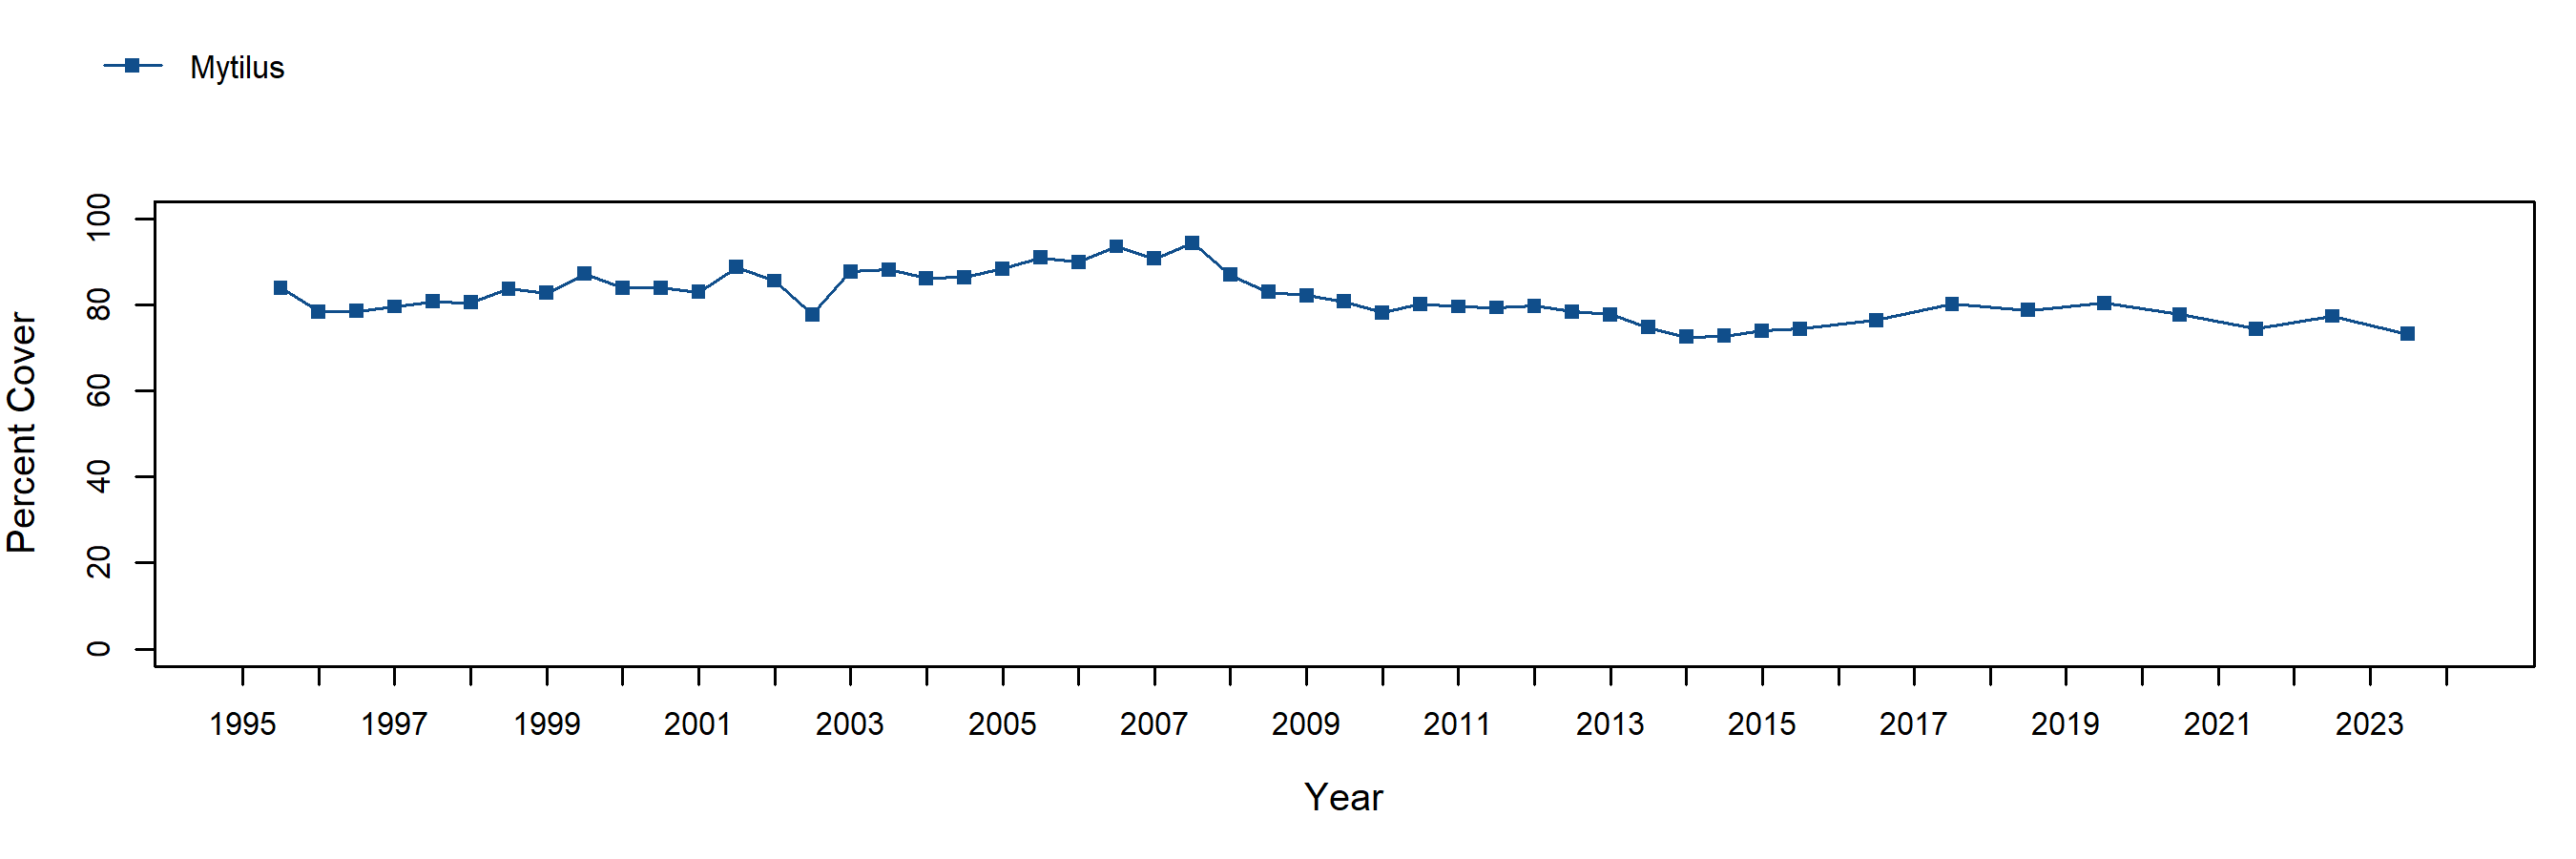 Point Sierra Nevada Mytilus trend plot